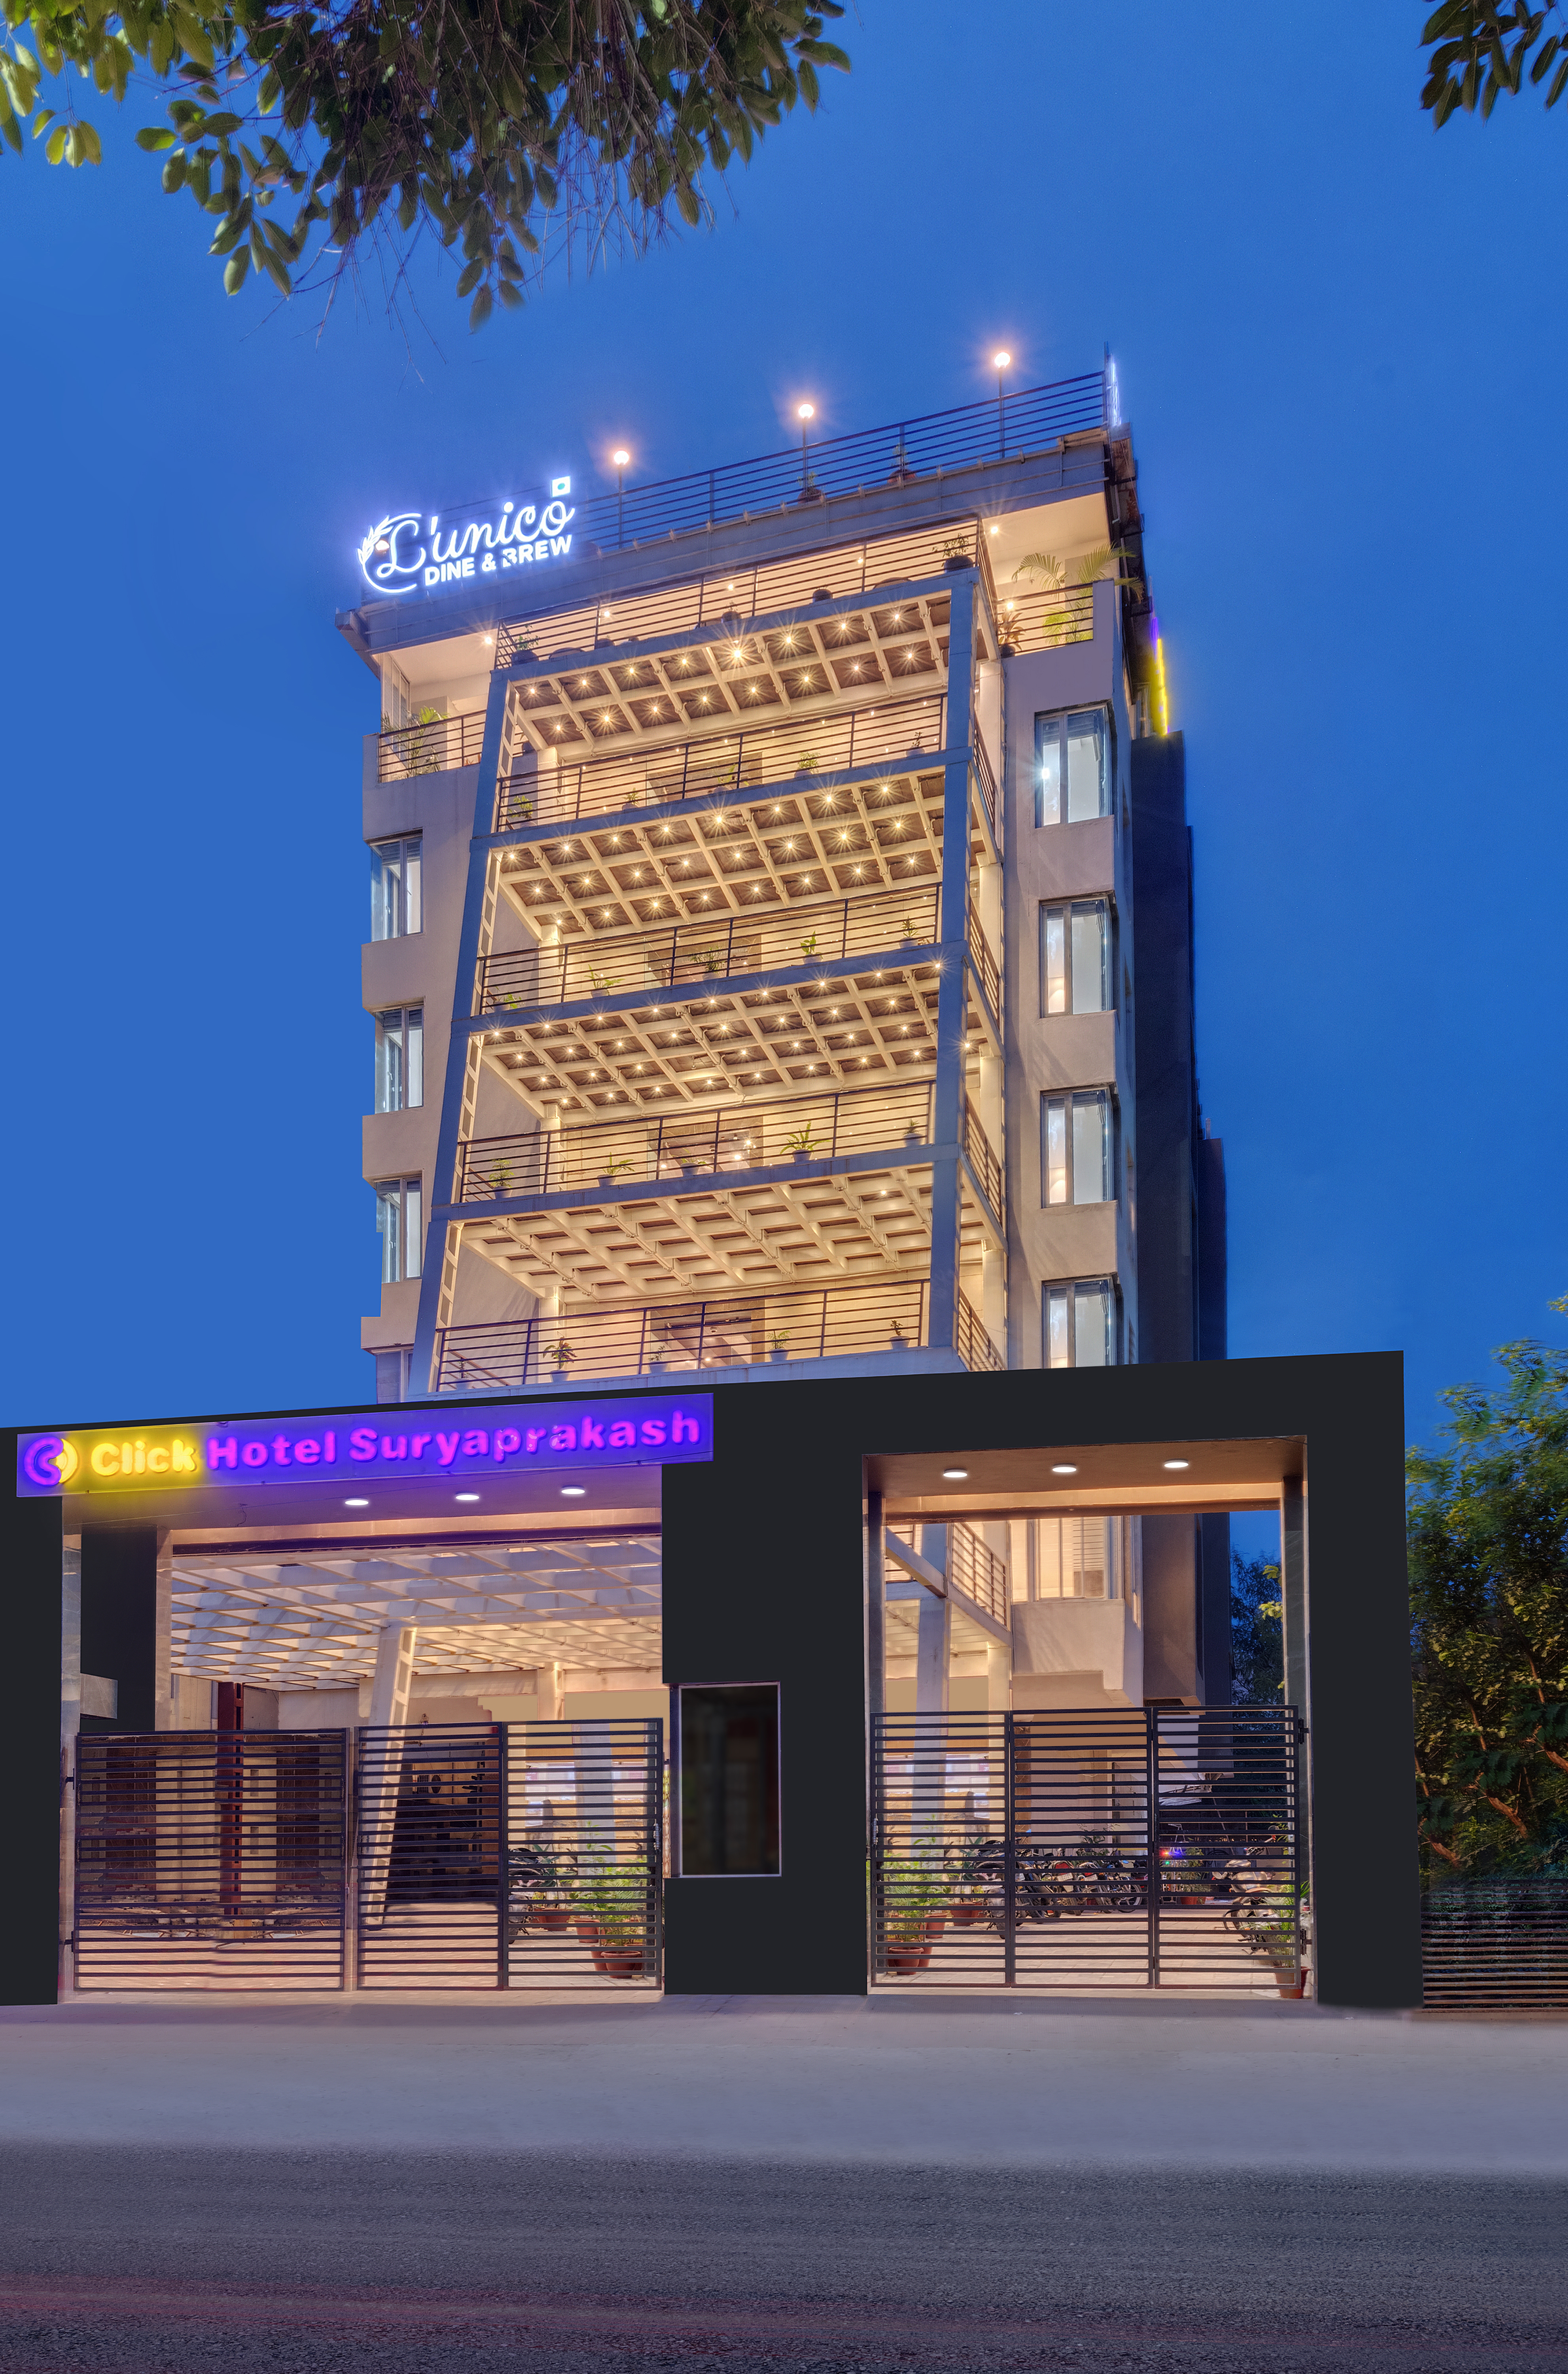 Click Hotel Suryaprakash